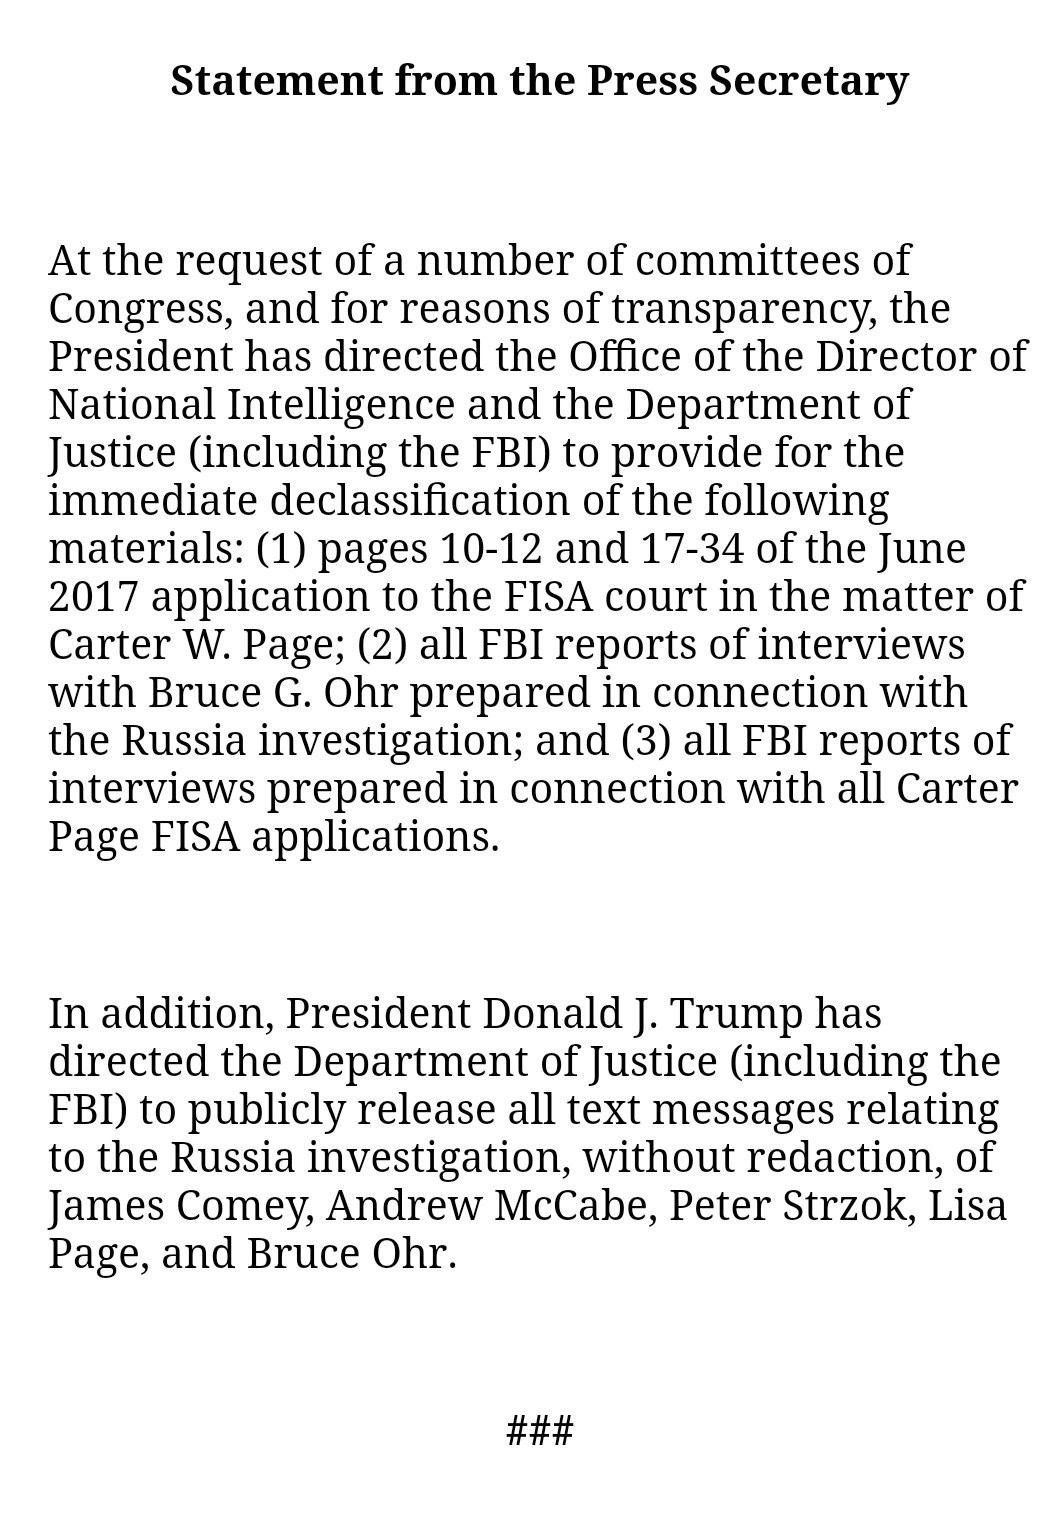 statement on FISA 